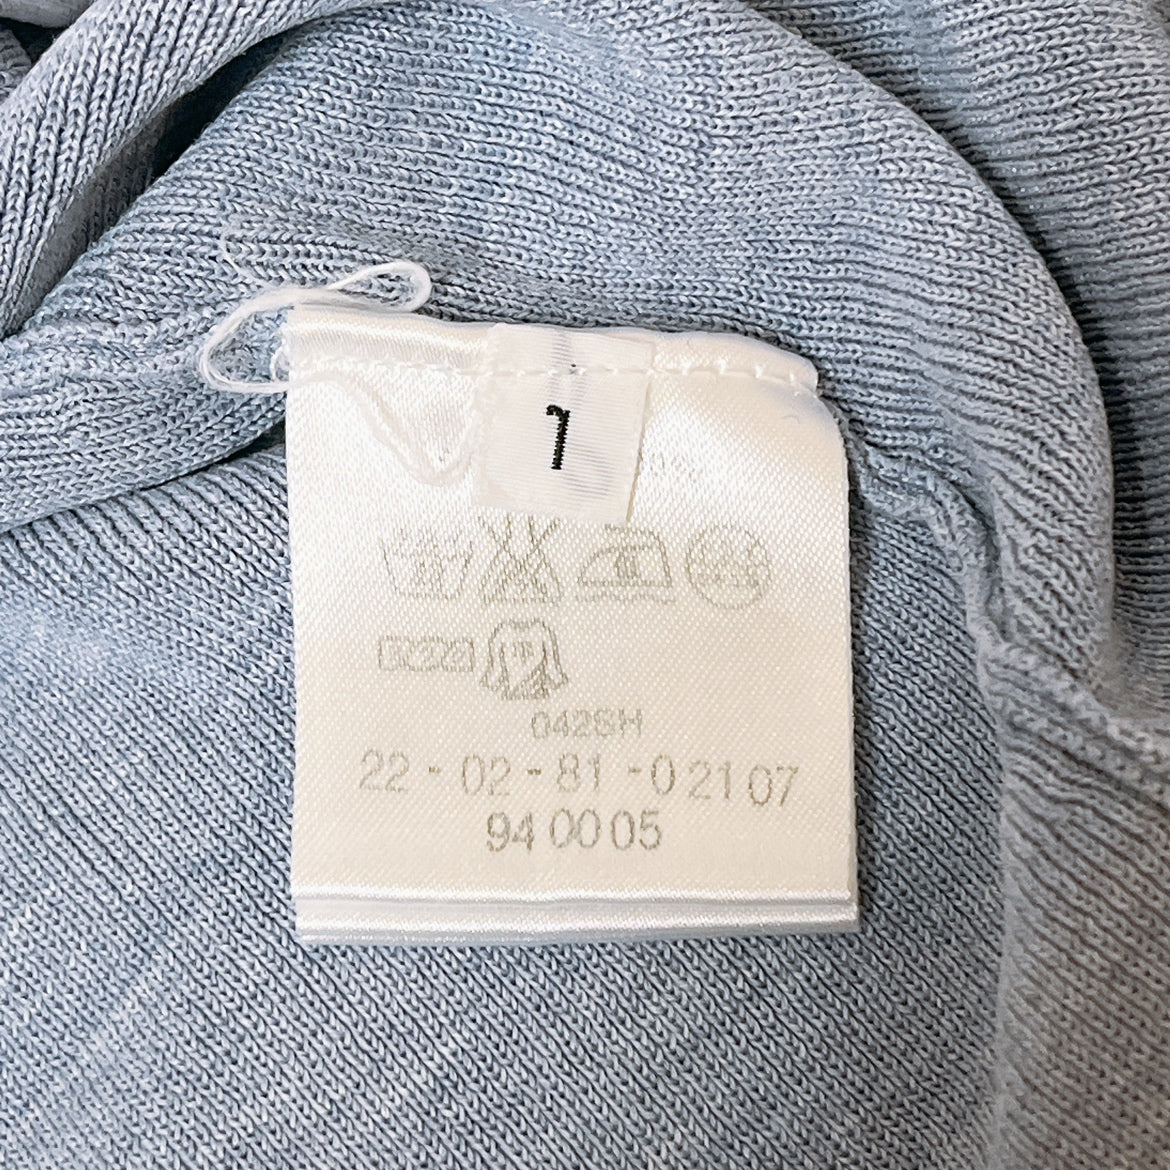 【14759】 DES PRES デプレ 長袖Tシャツ ロンT カットソー サイズ1 / 約S サックスブルー シルク100% 無地 シンプル 清涼感 レディース